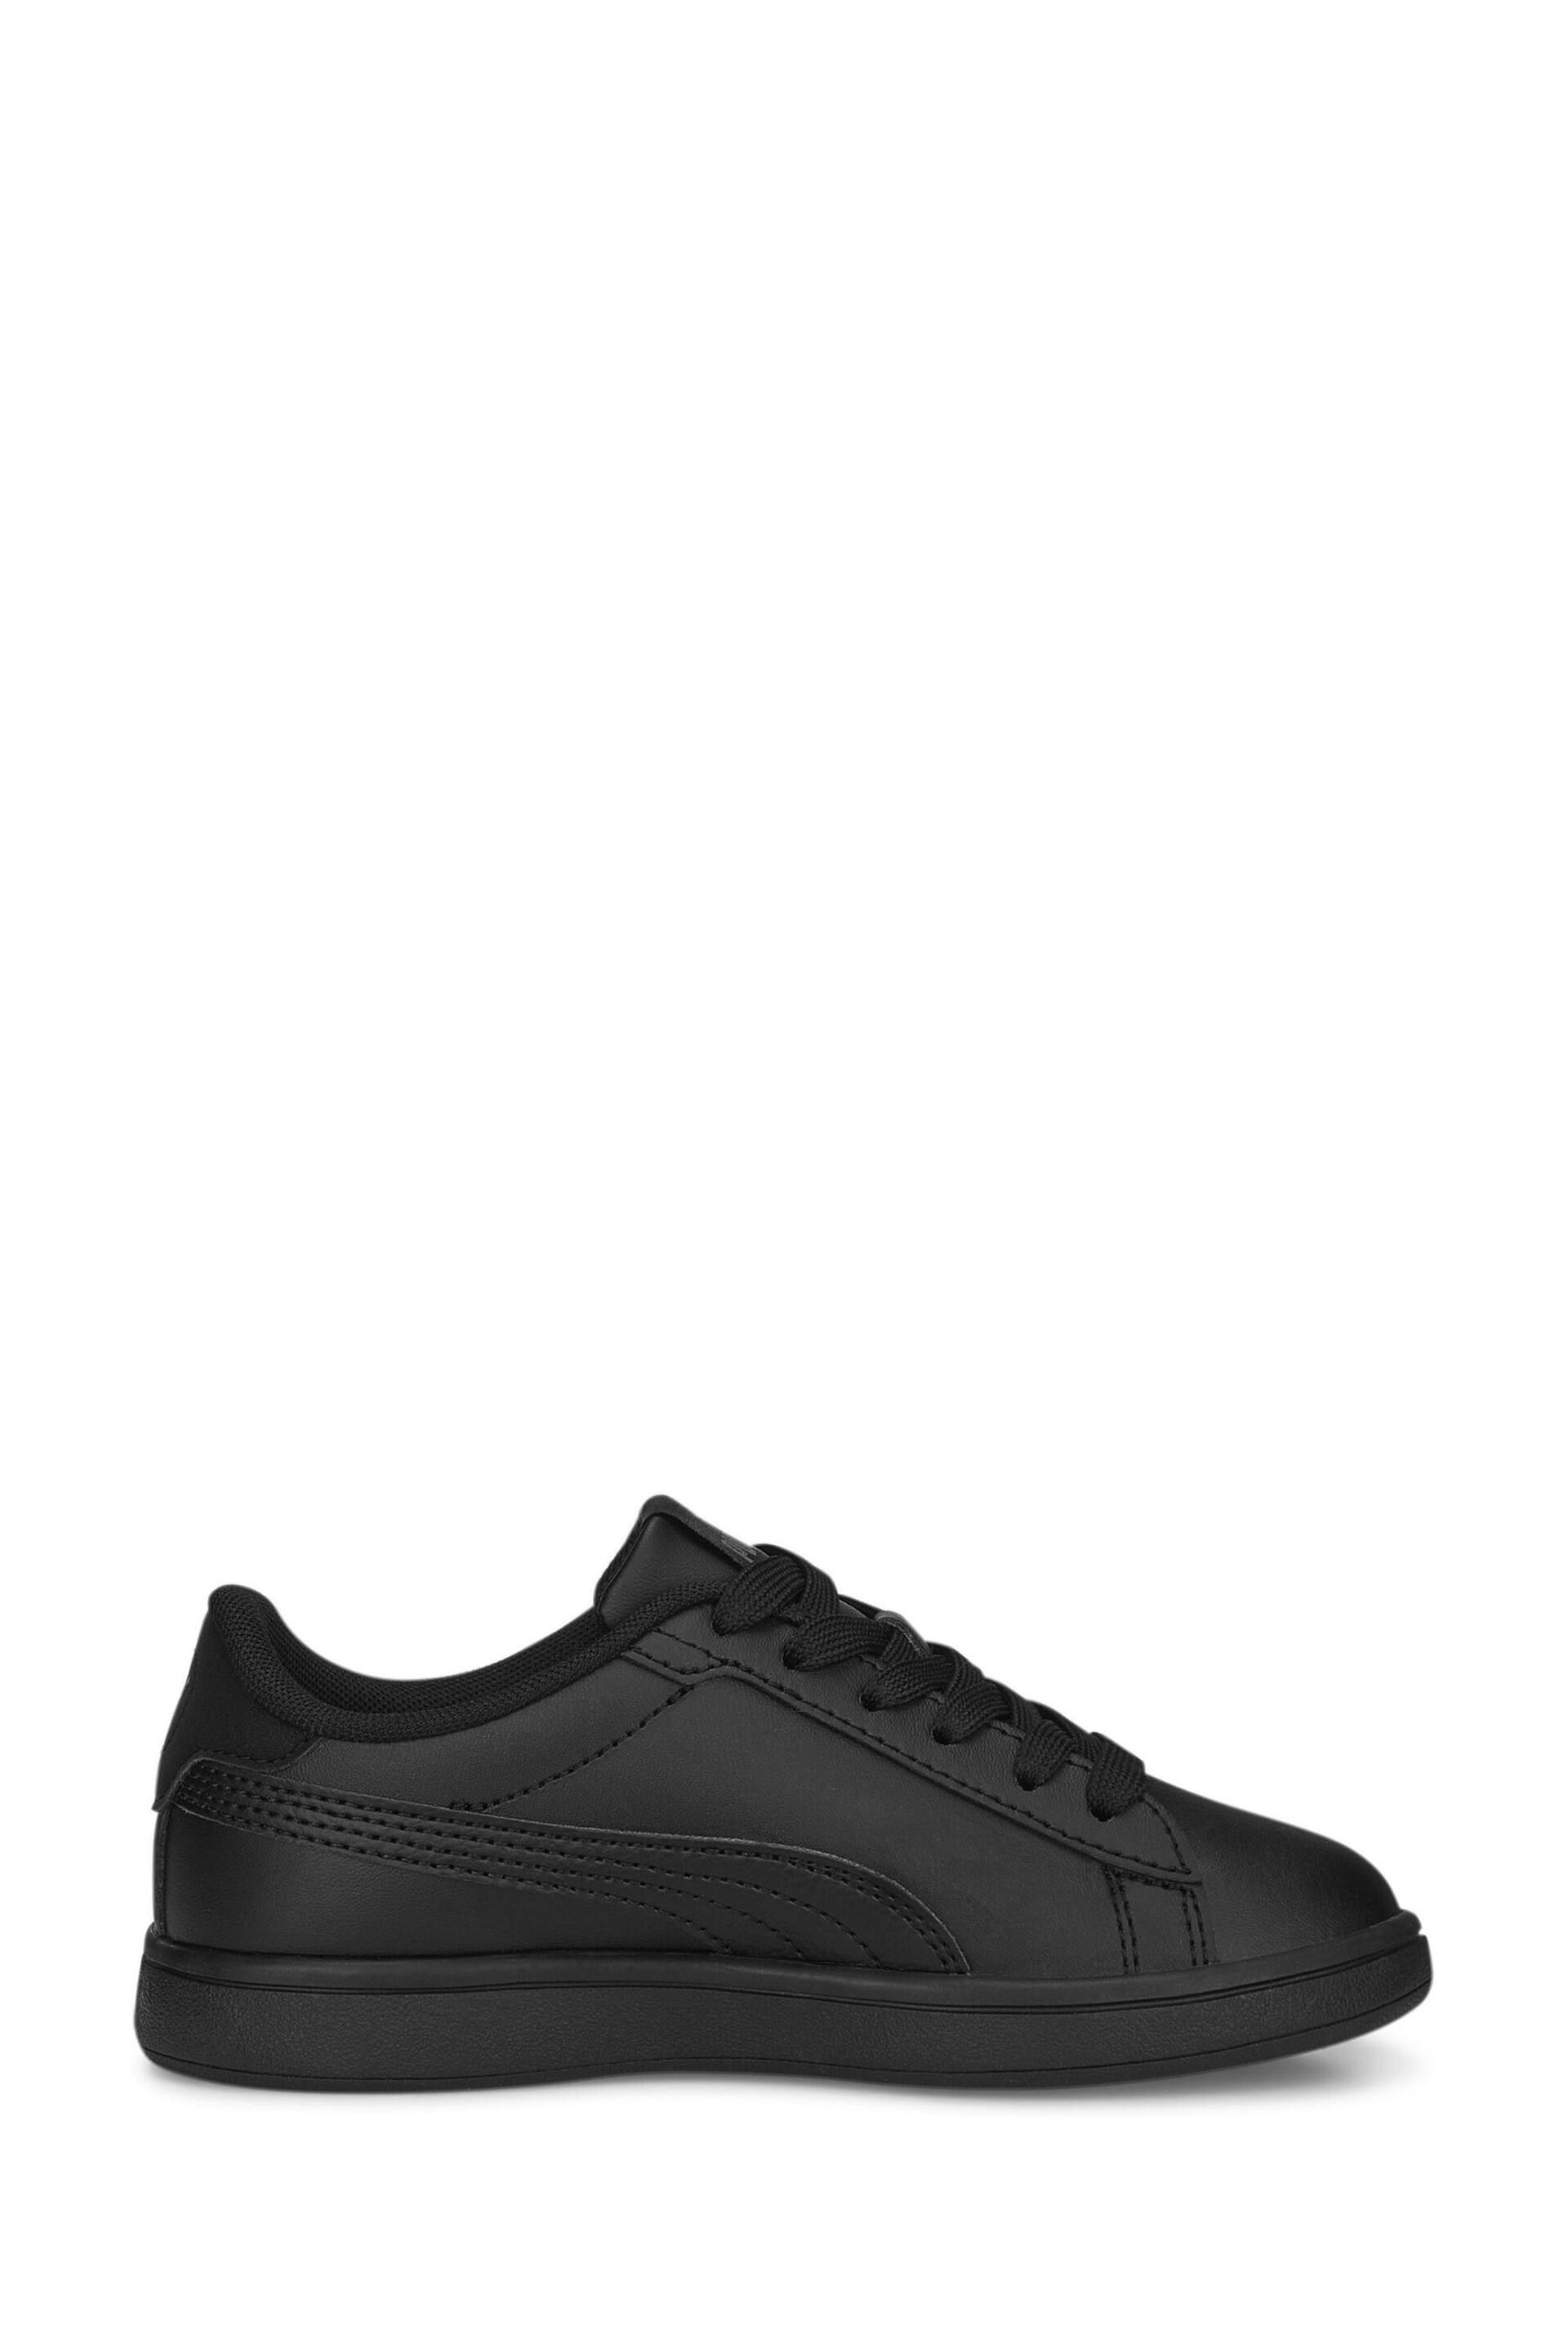 Puma Black Smash 3.0 L Shoes - Image 1 of 6